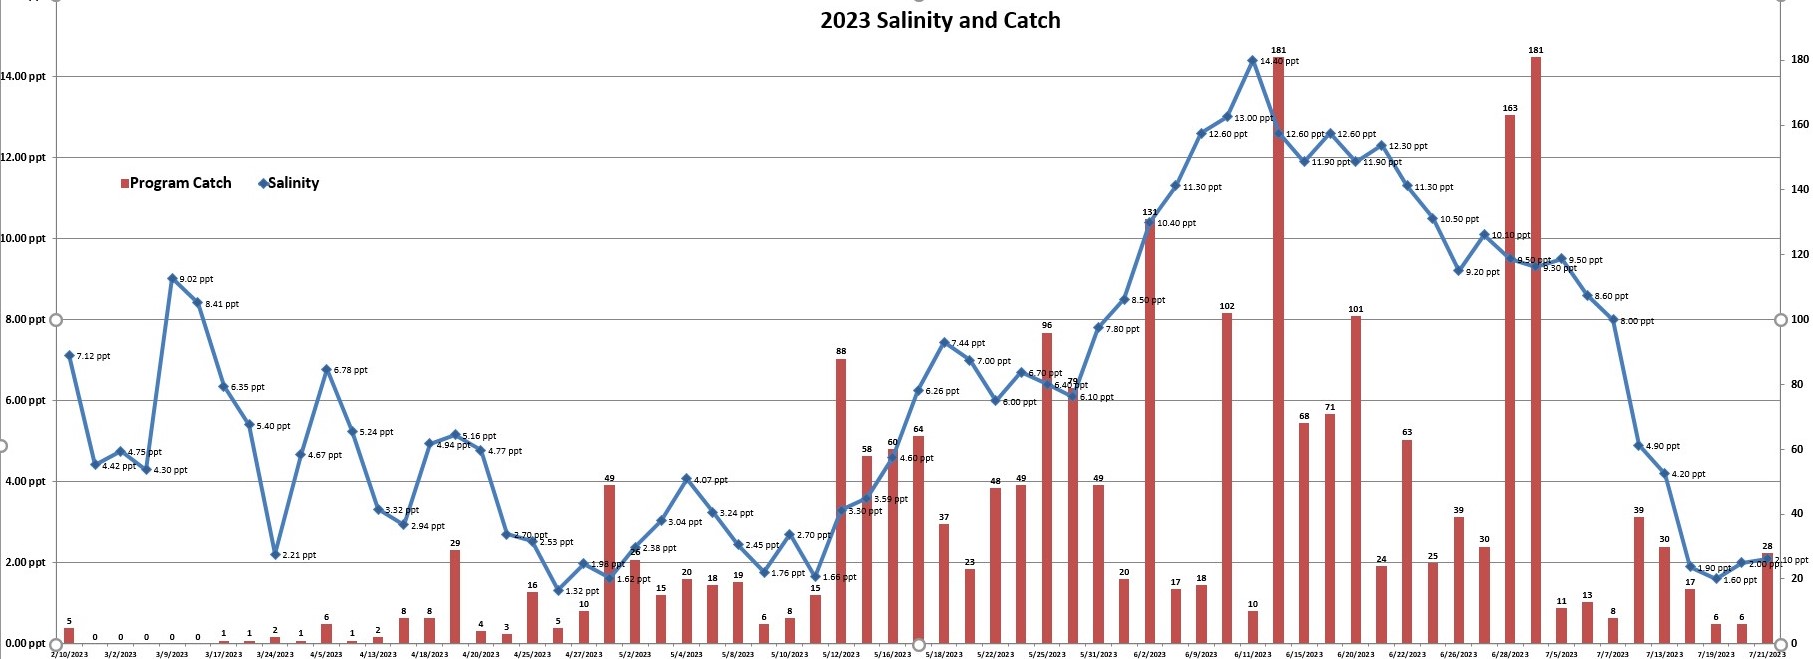 Catch and salinity